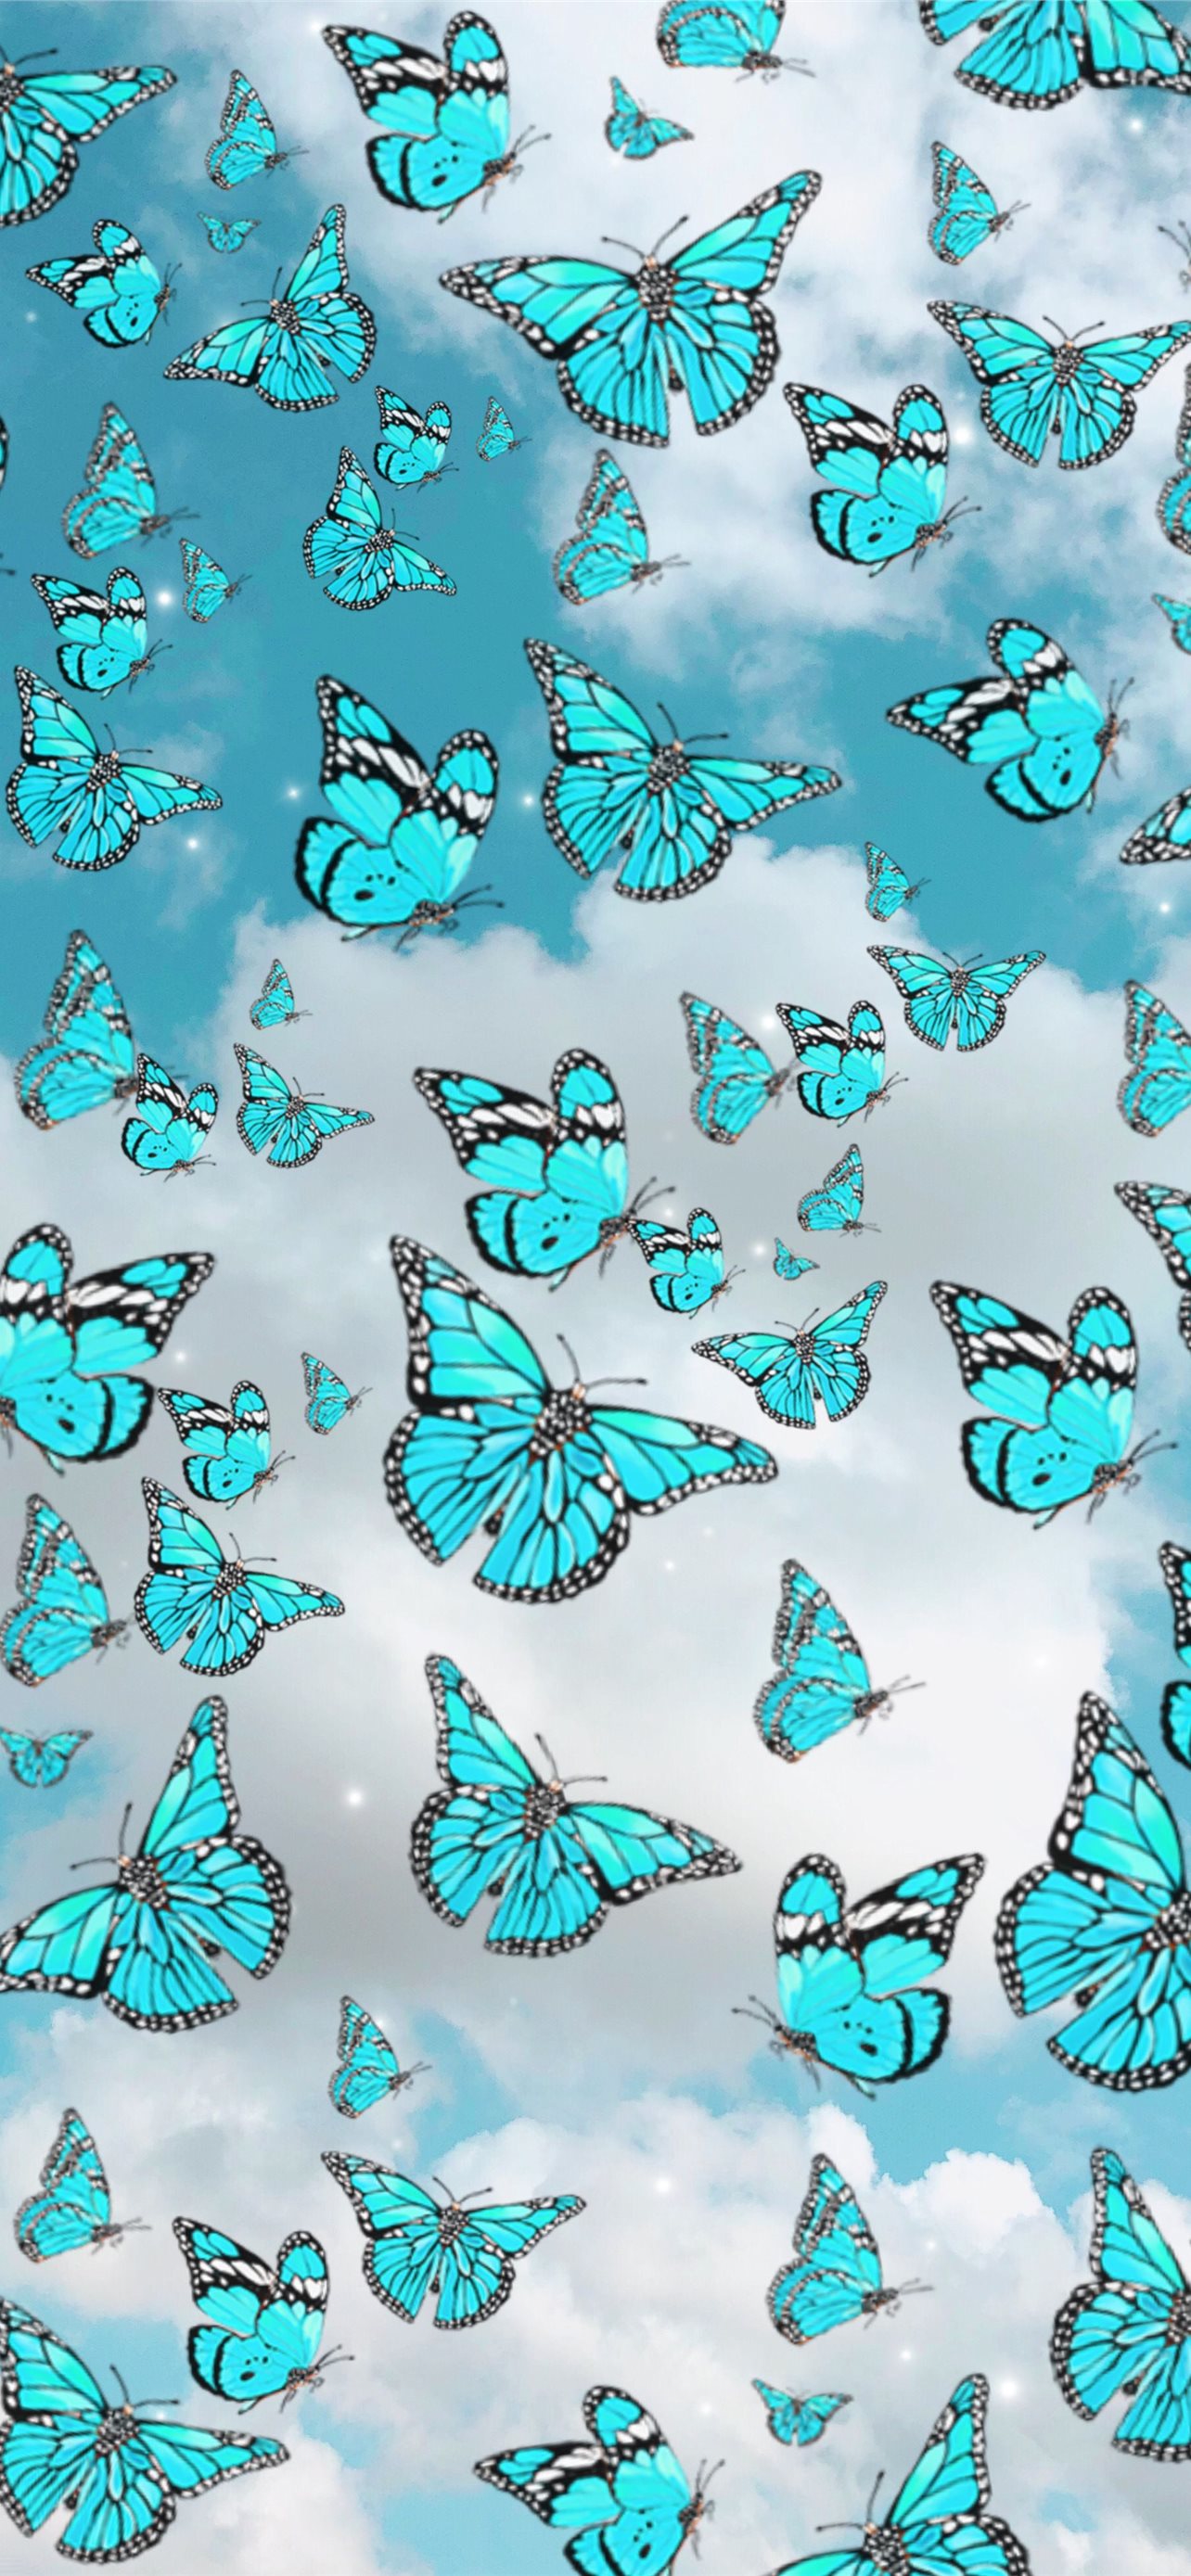 Latest Butterfly iPhone HD Wallpaper